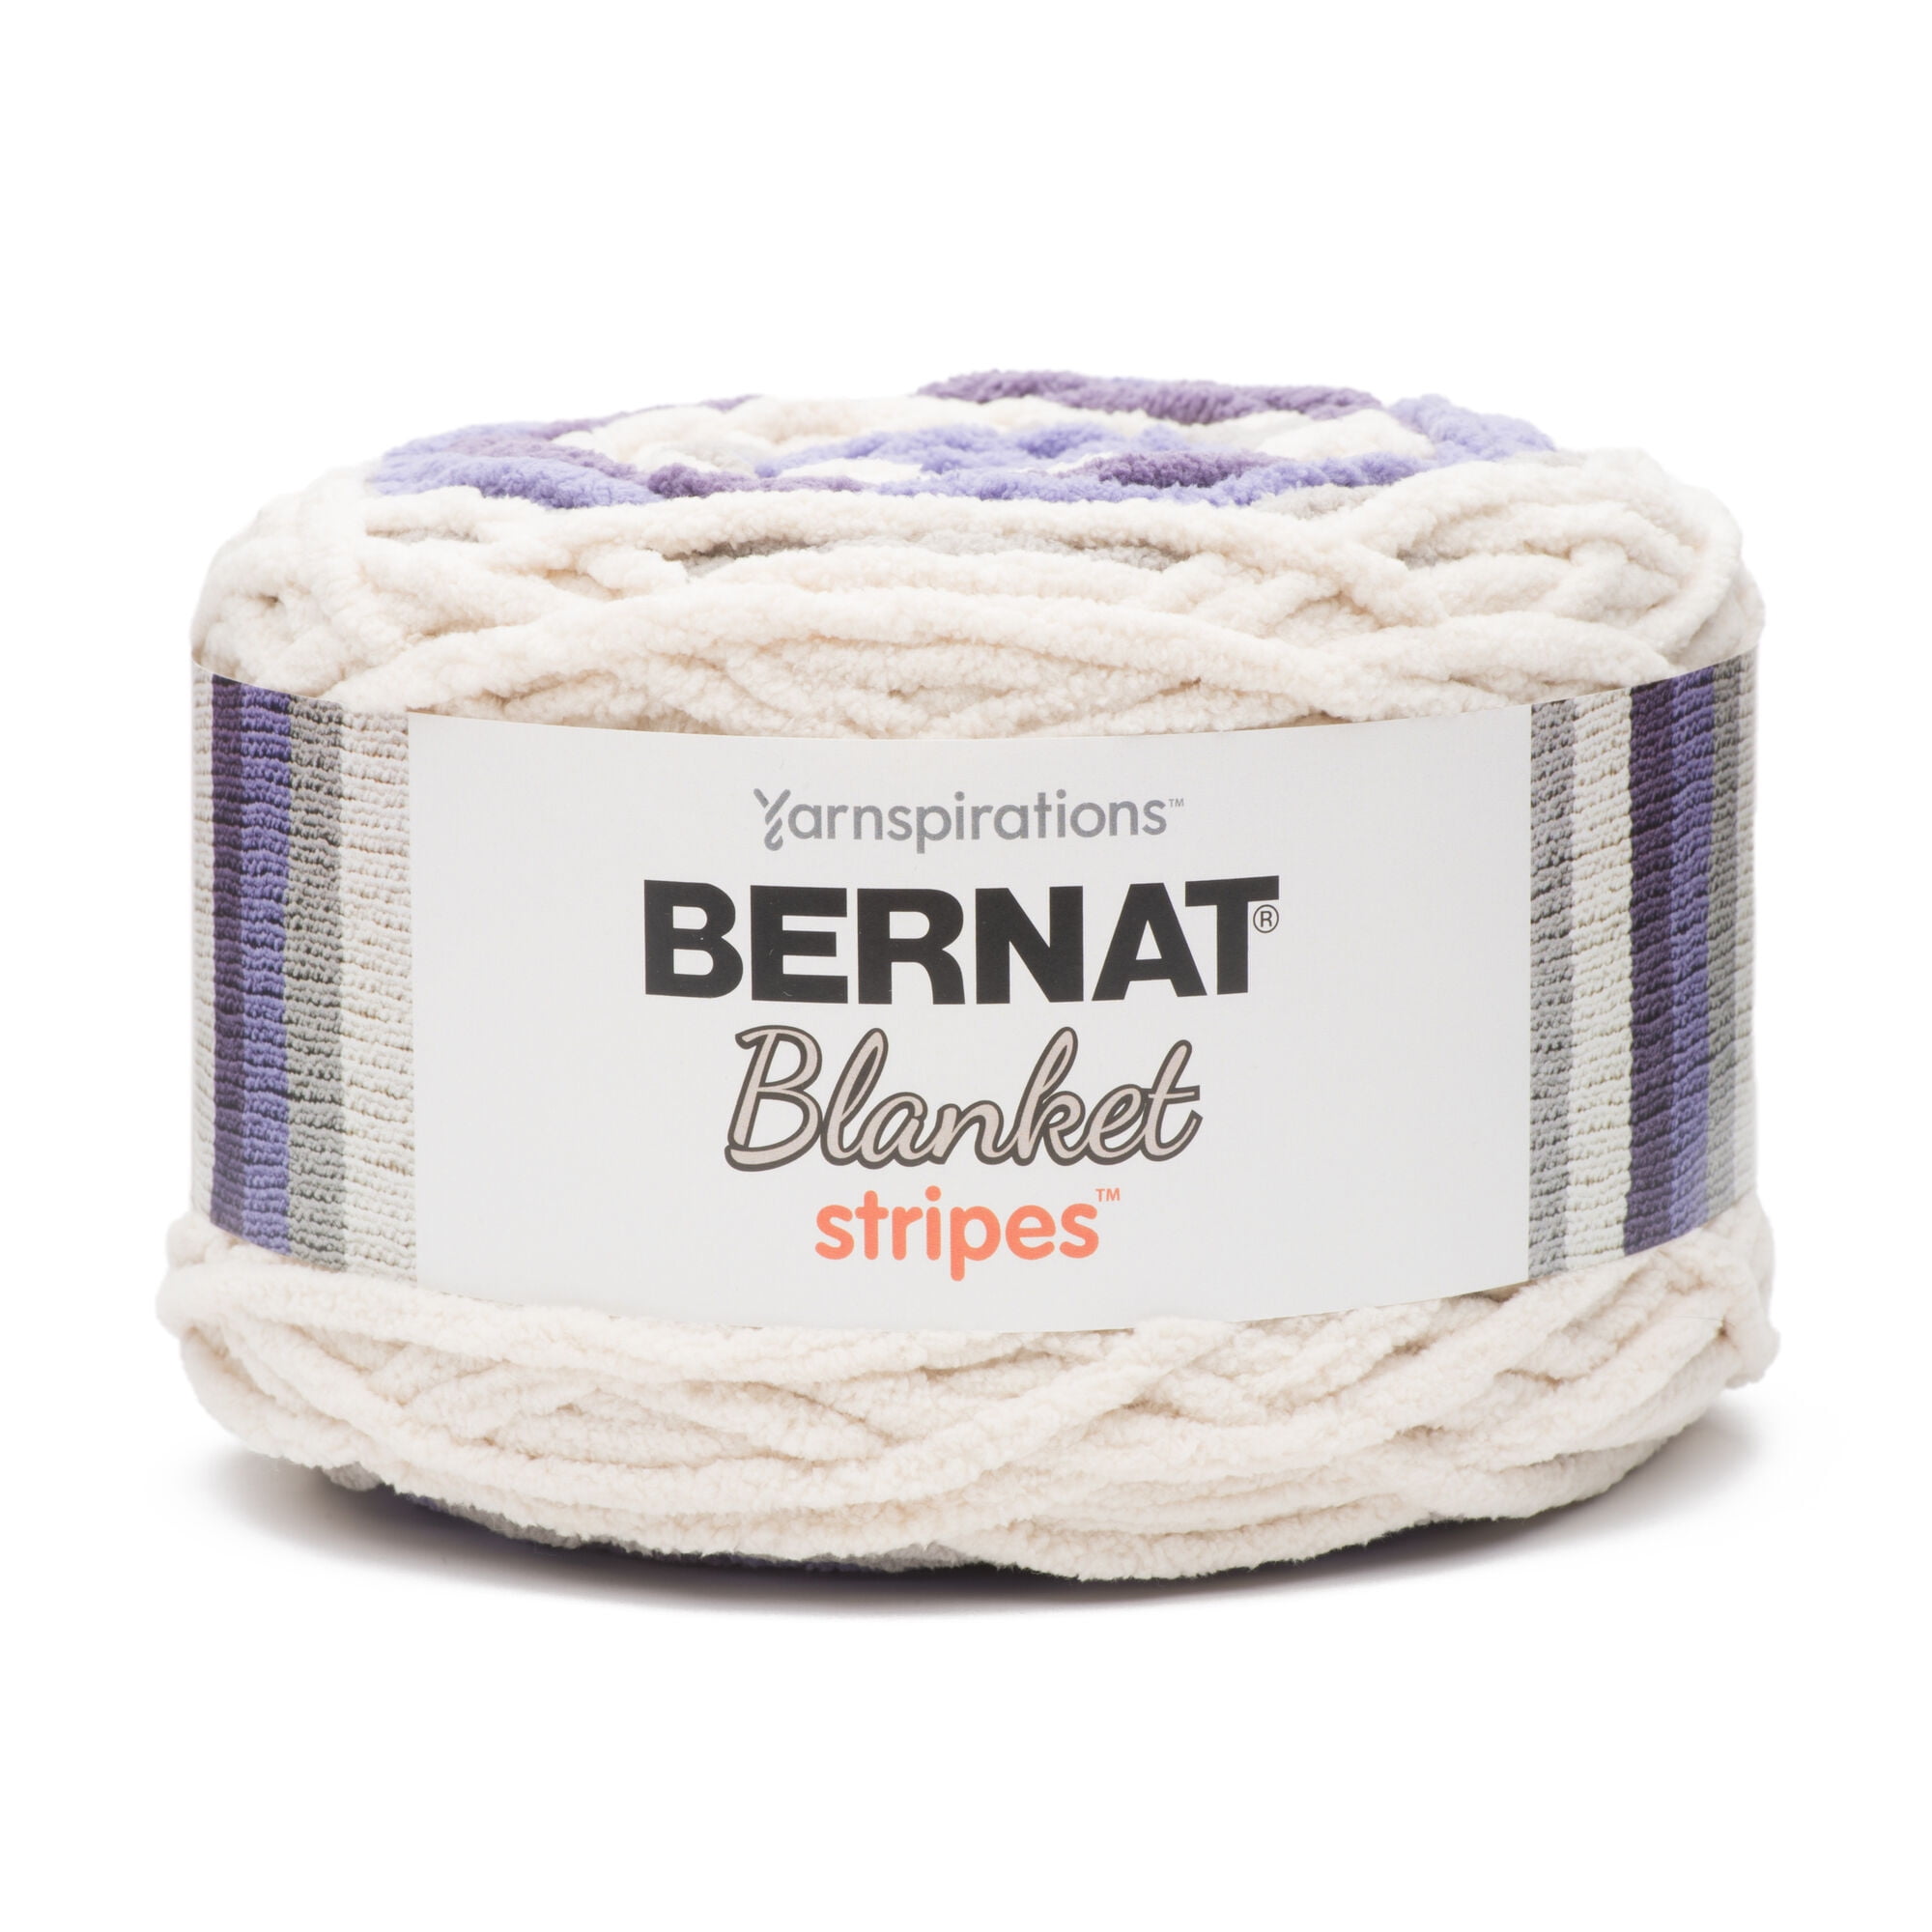 Bernat Blanket Stripes #6 Super Bulky Polyester Yarn, Cape Cod 10.5oz/300g, 220 Yards (4 Pack)